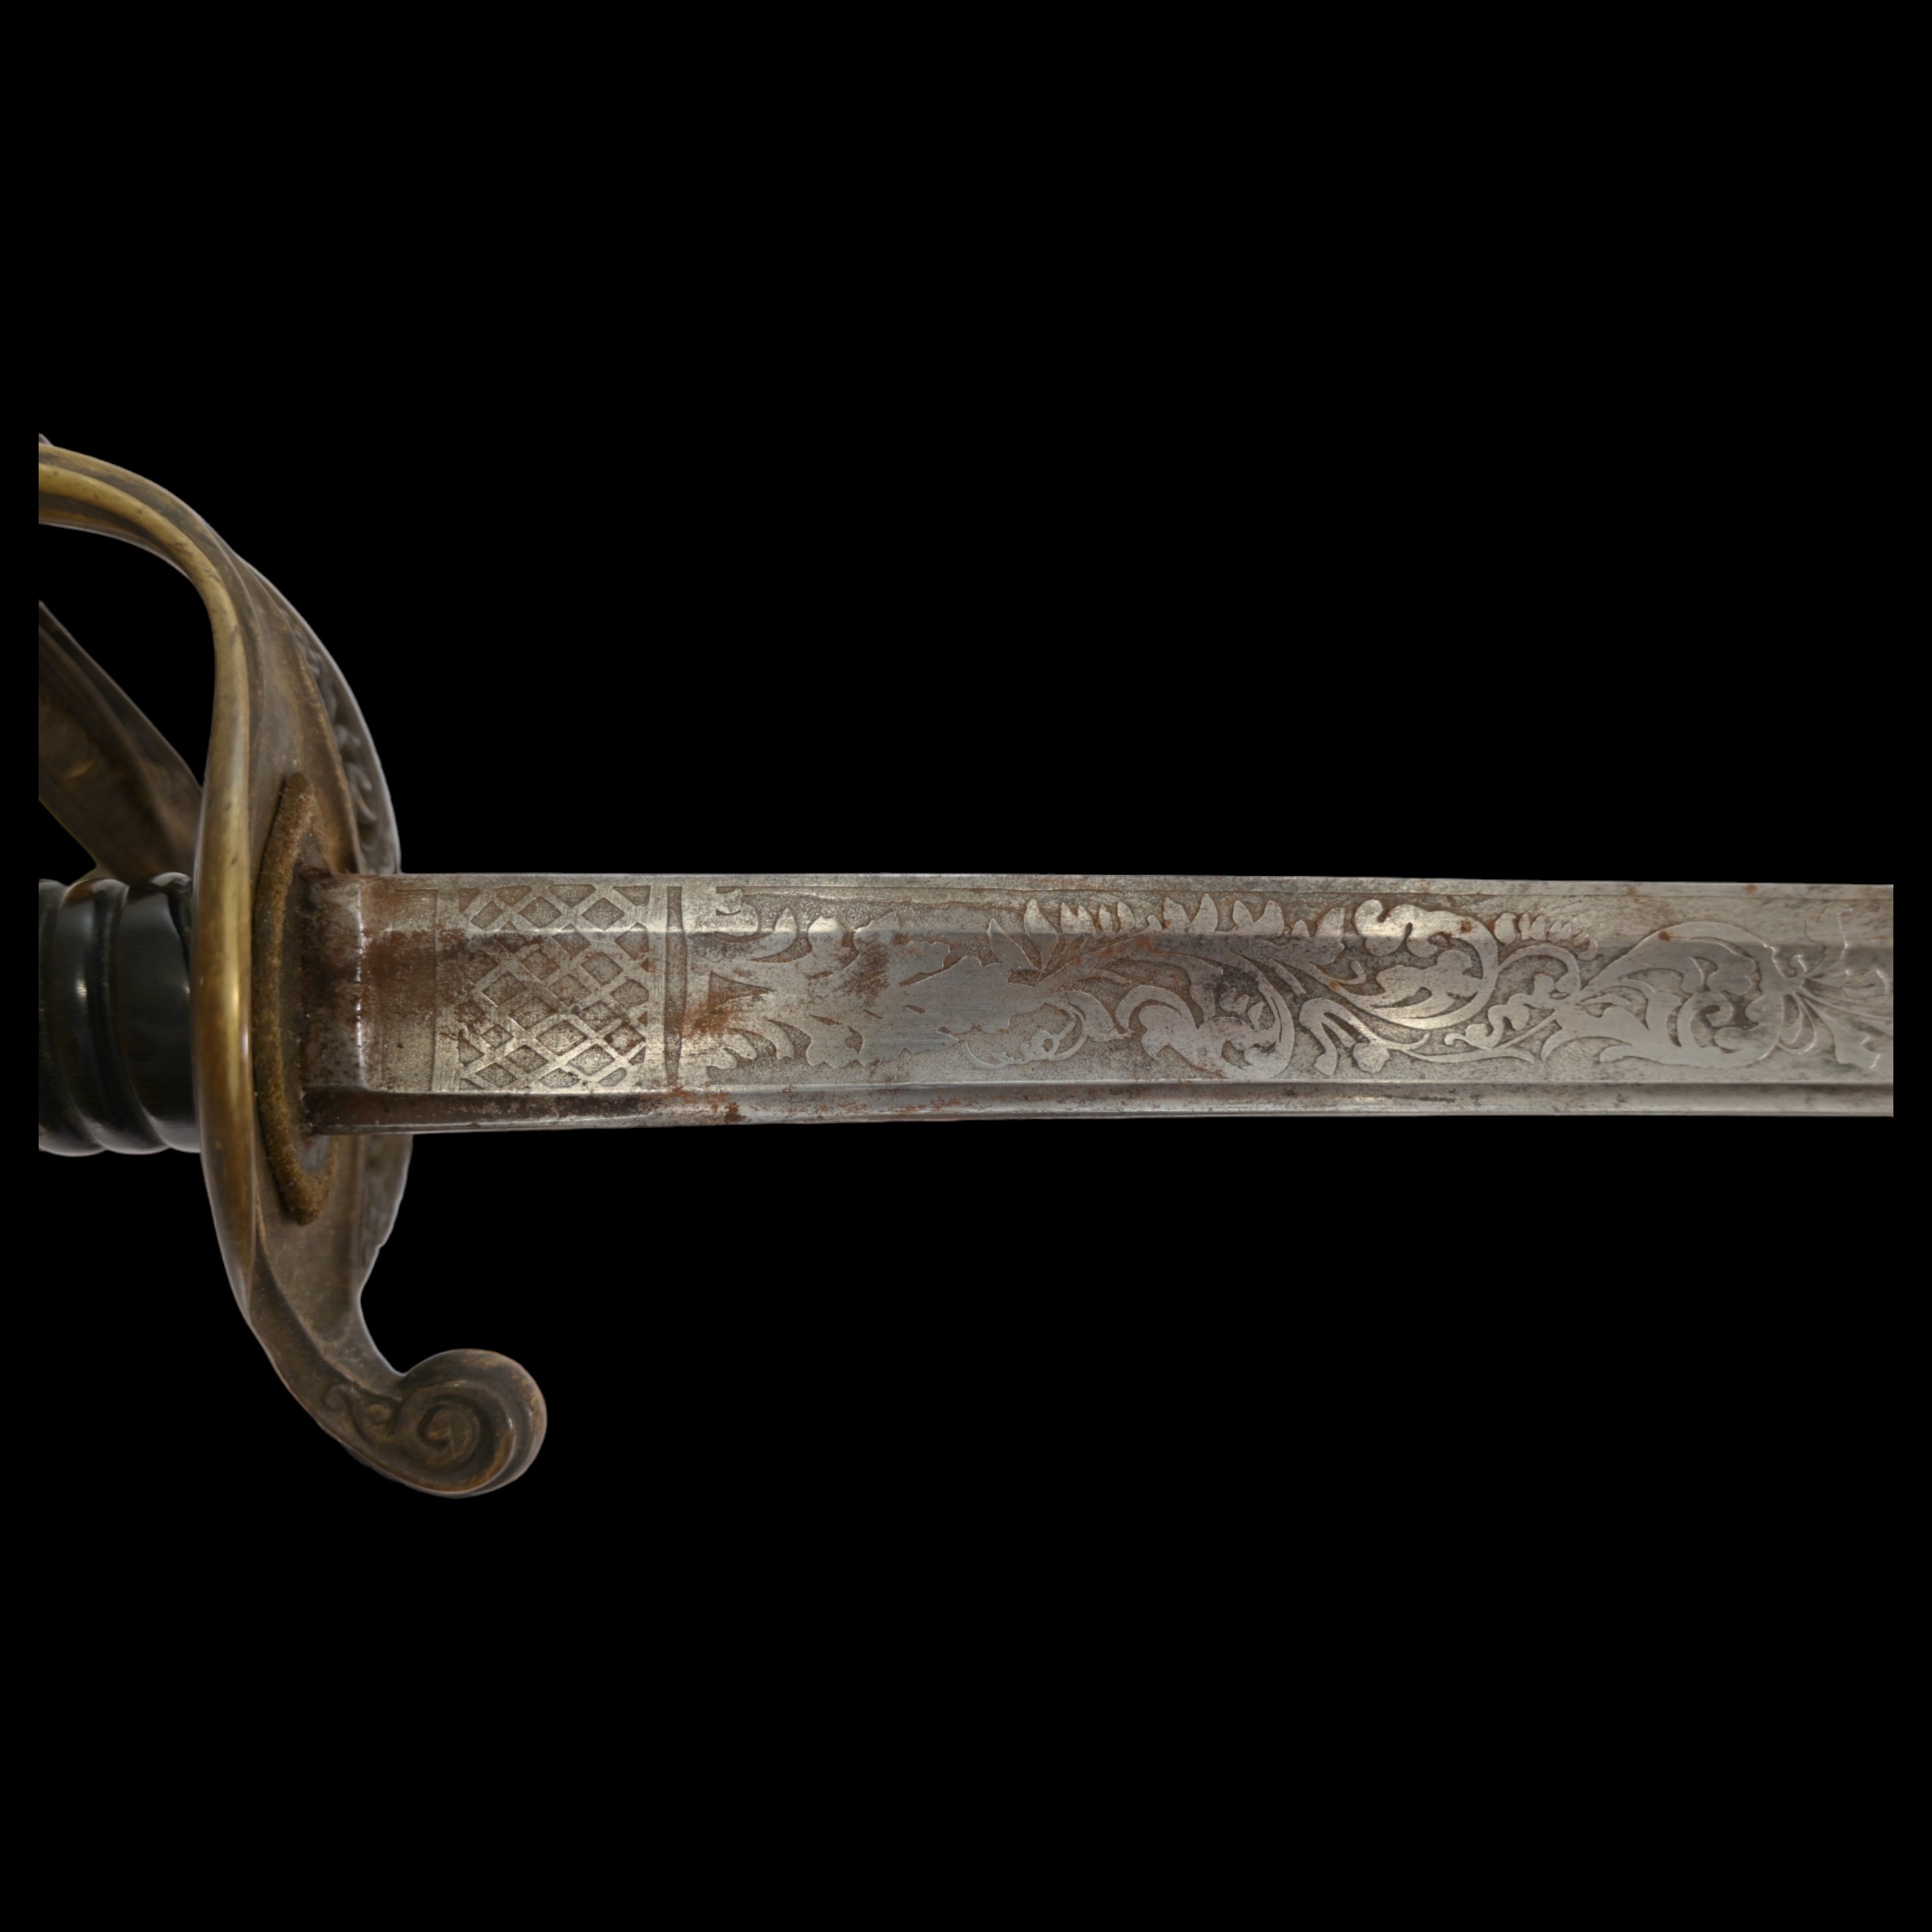 Civil War period M1850 foot officer's sword, Klingenthal belonged to Capt. S. Zuschlag. - Image 11 of 17